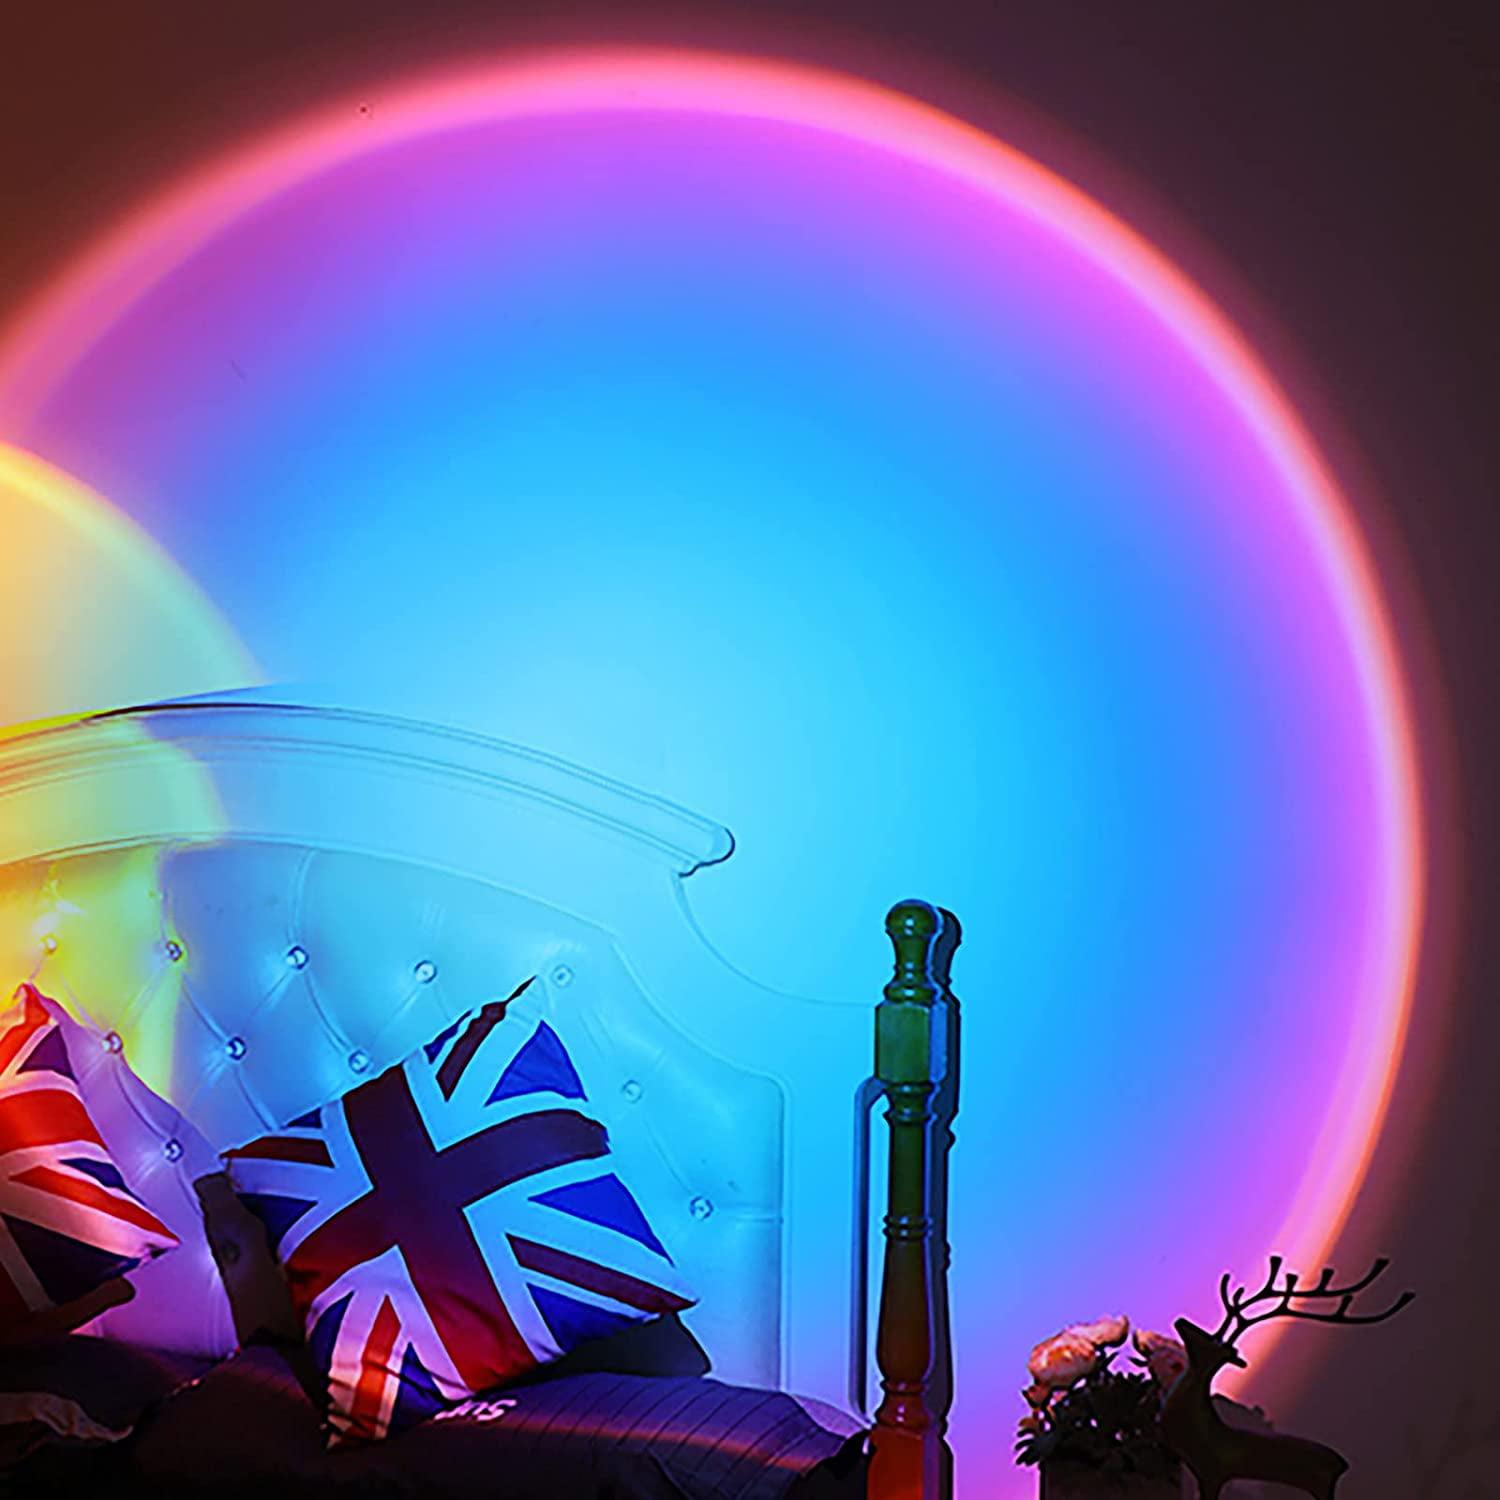 X-CHENG Sunset Projection Lamp,180 Degree Rotation Rainbow